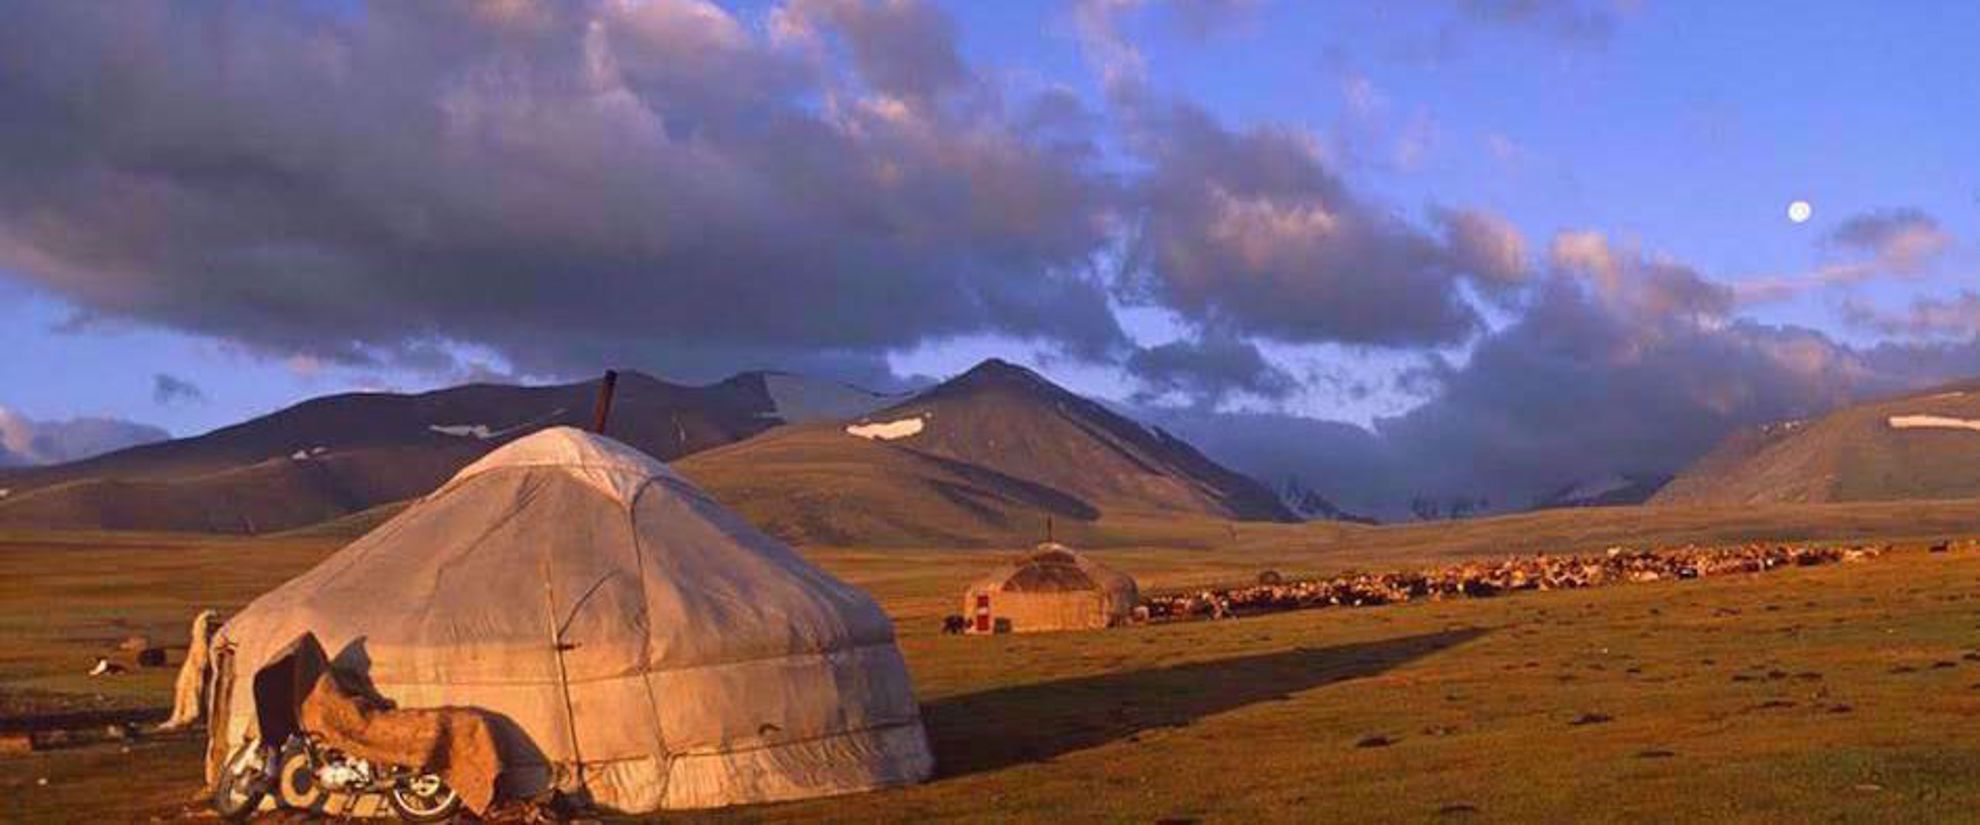 sun shining on tents in mongolia